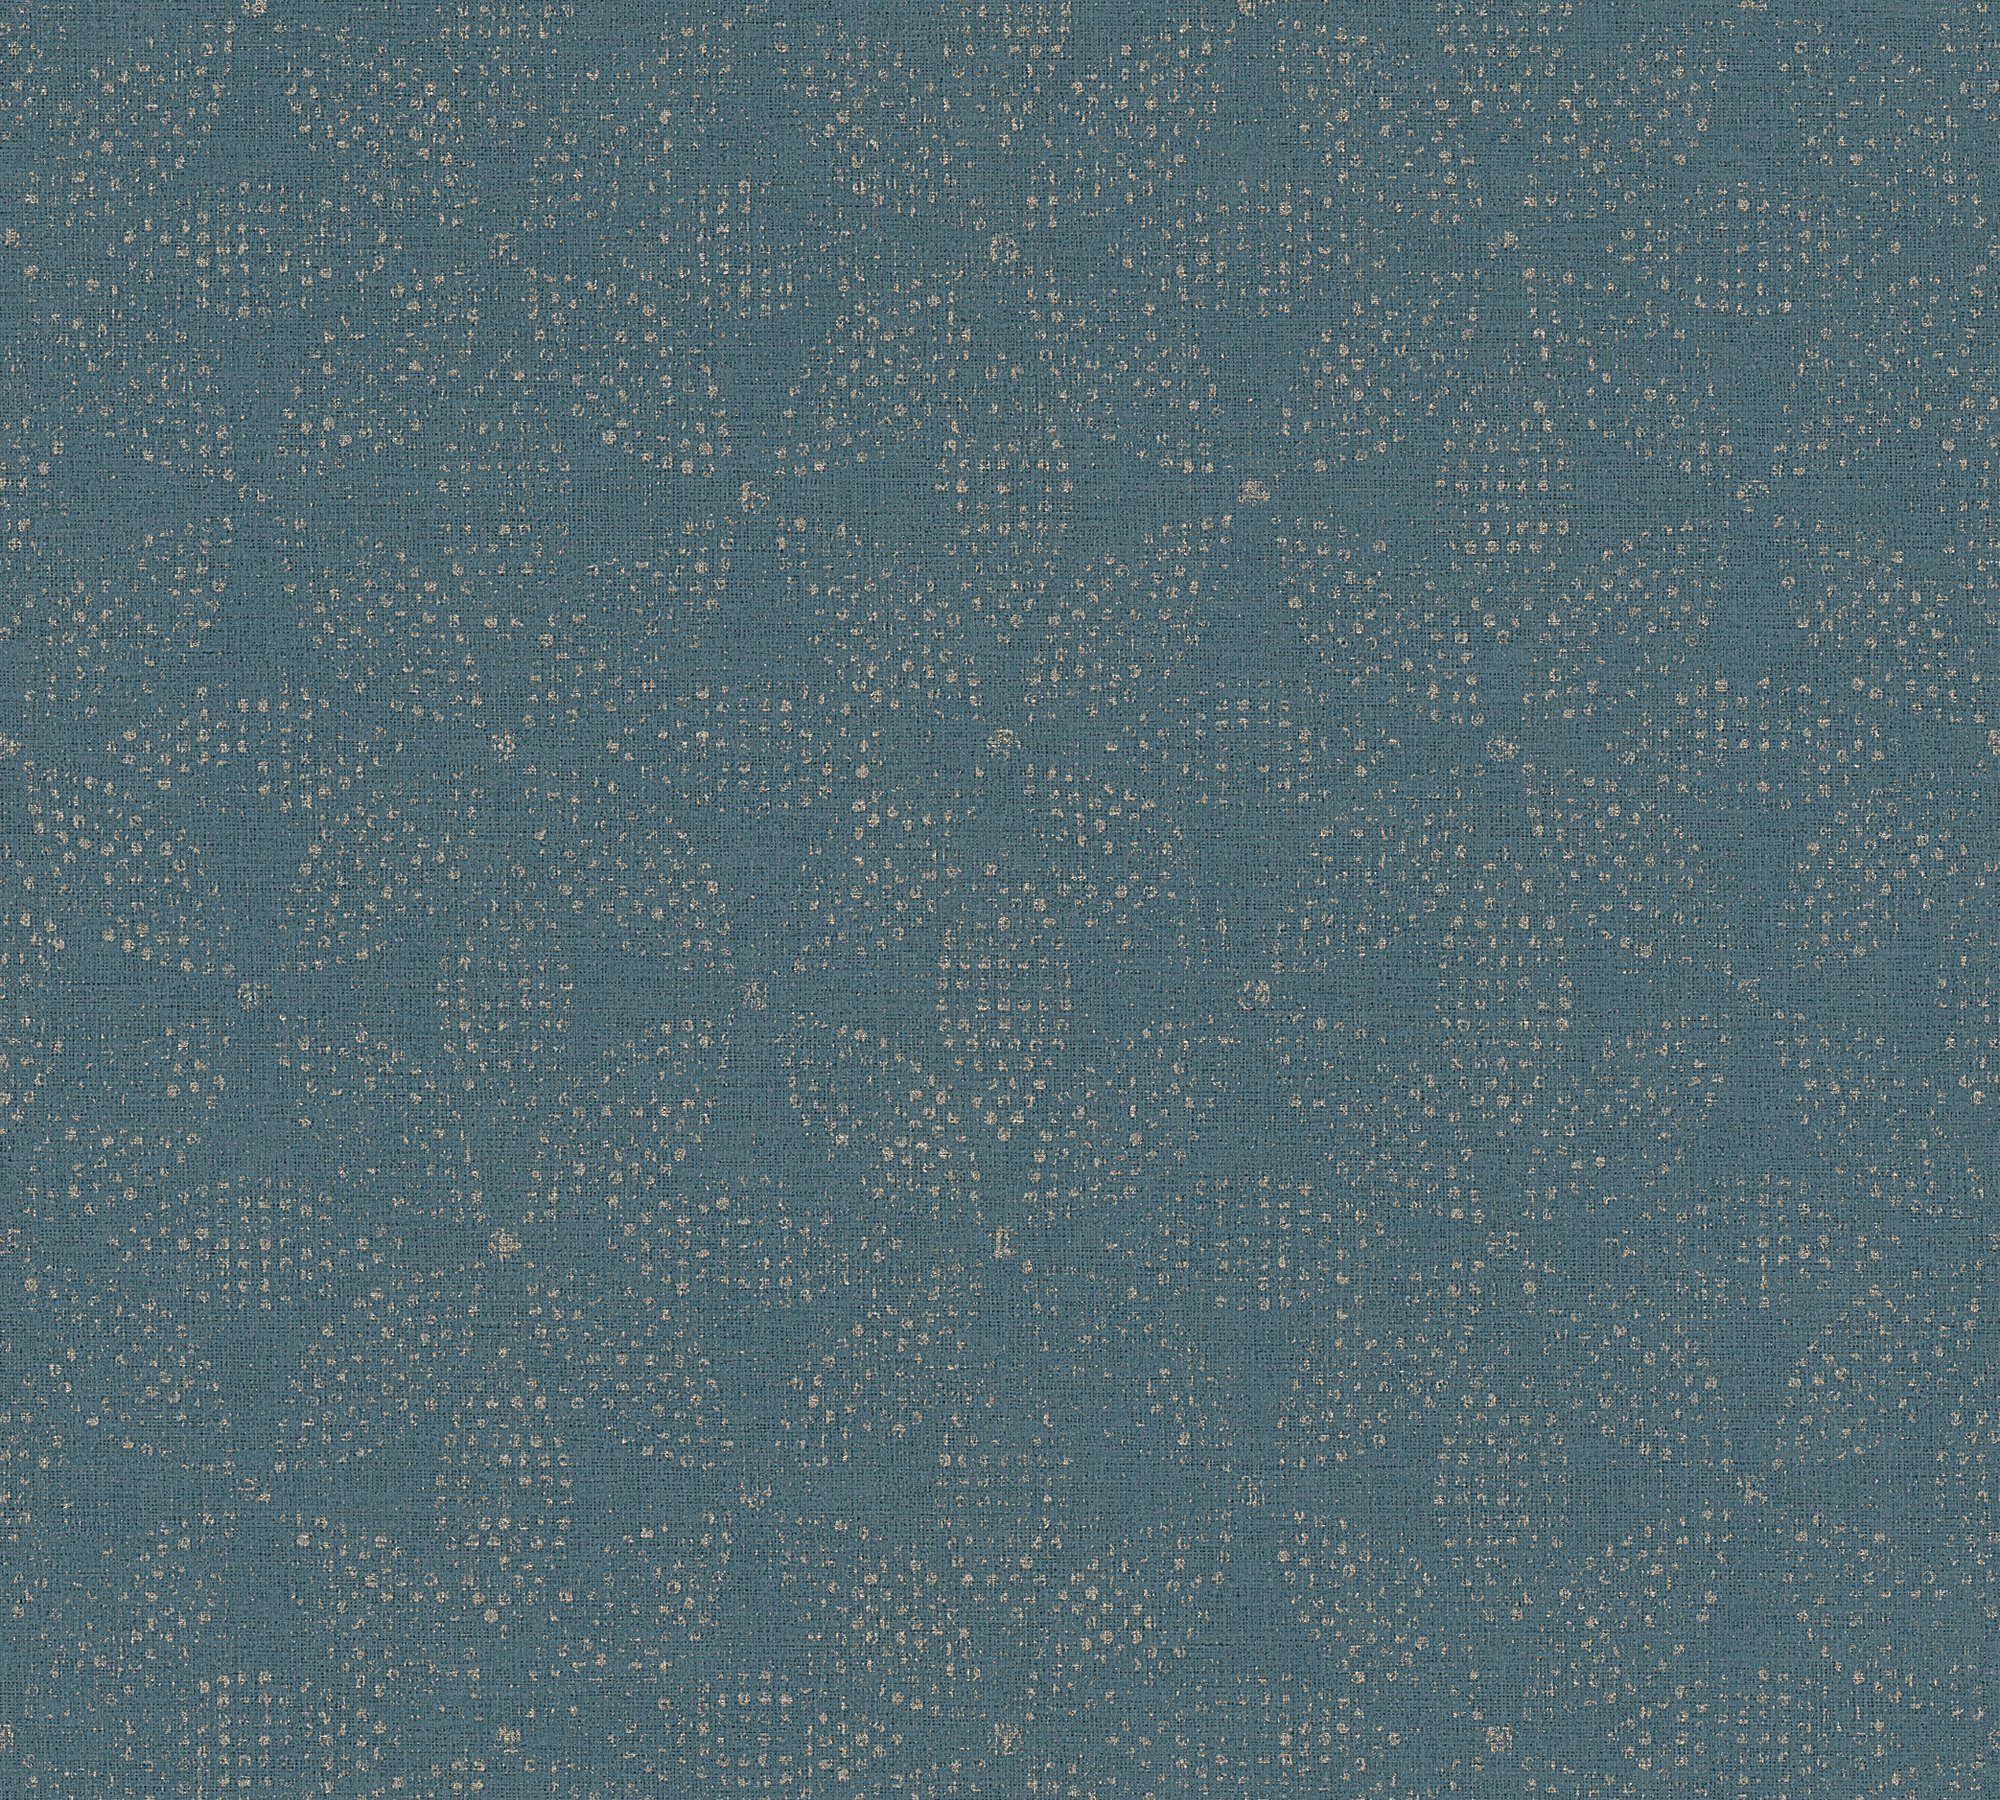 Ethnic Création Geometrisch Vliestapete A.S. blau Origin, gemustert, Tapete